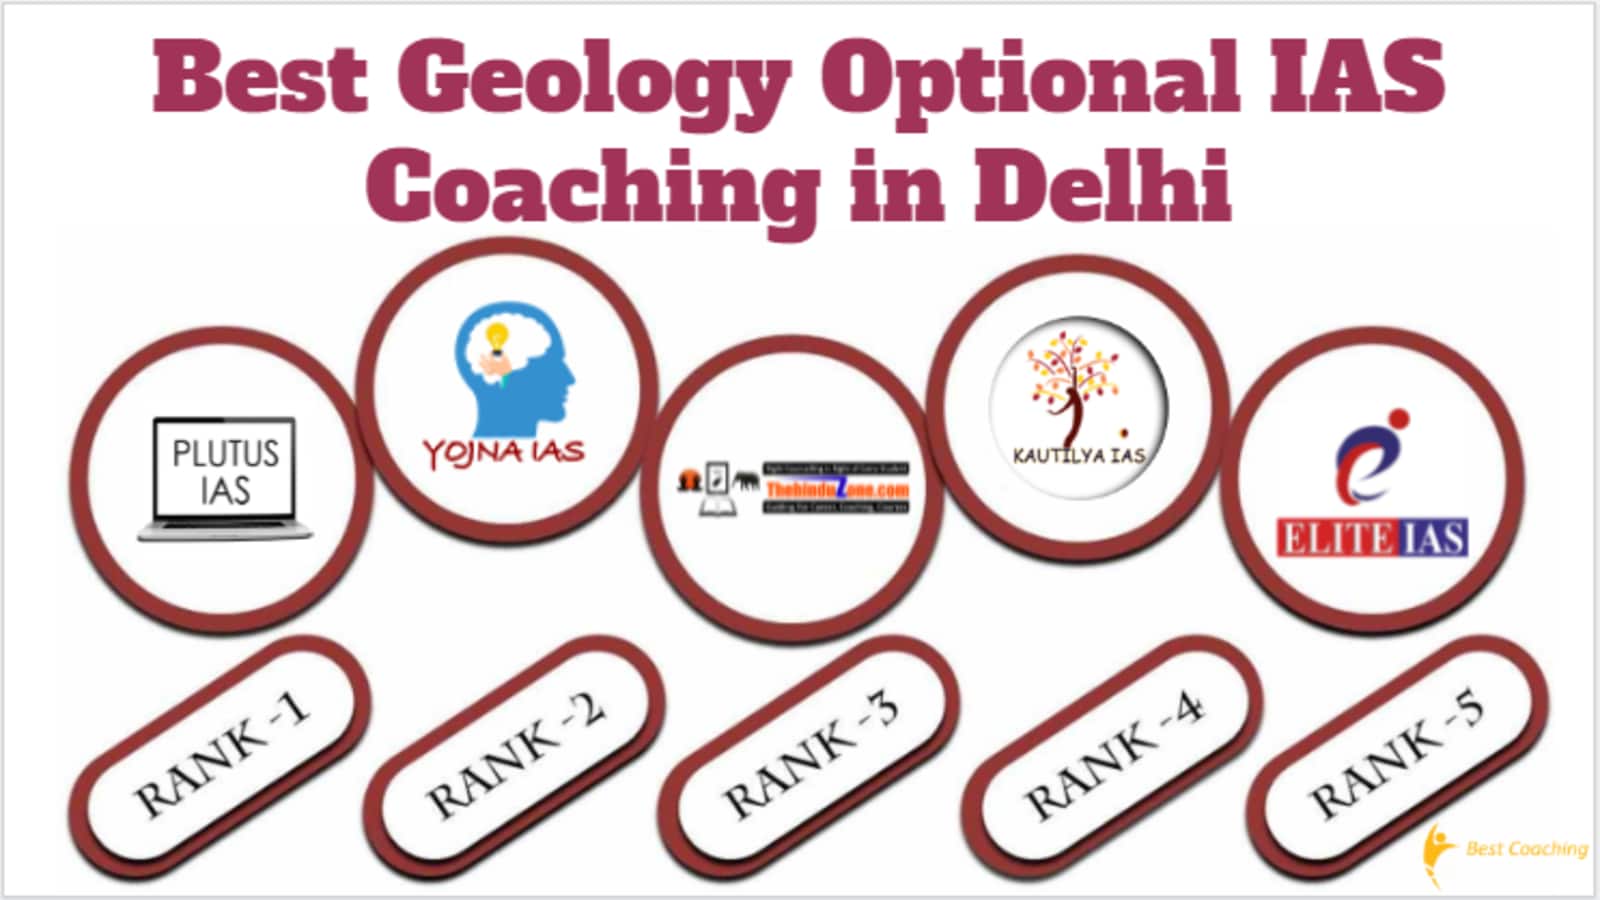 Best Geology Optional IAS Coaching in Delhi